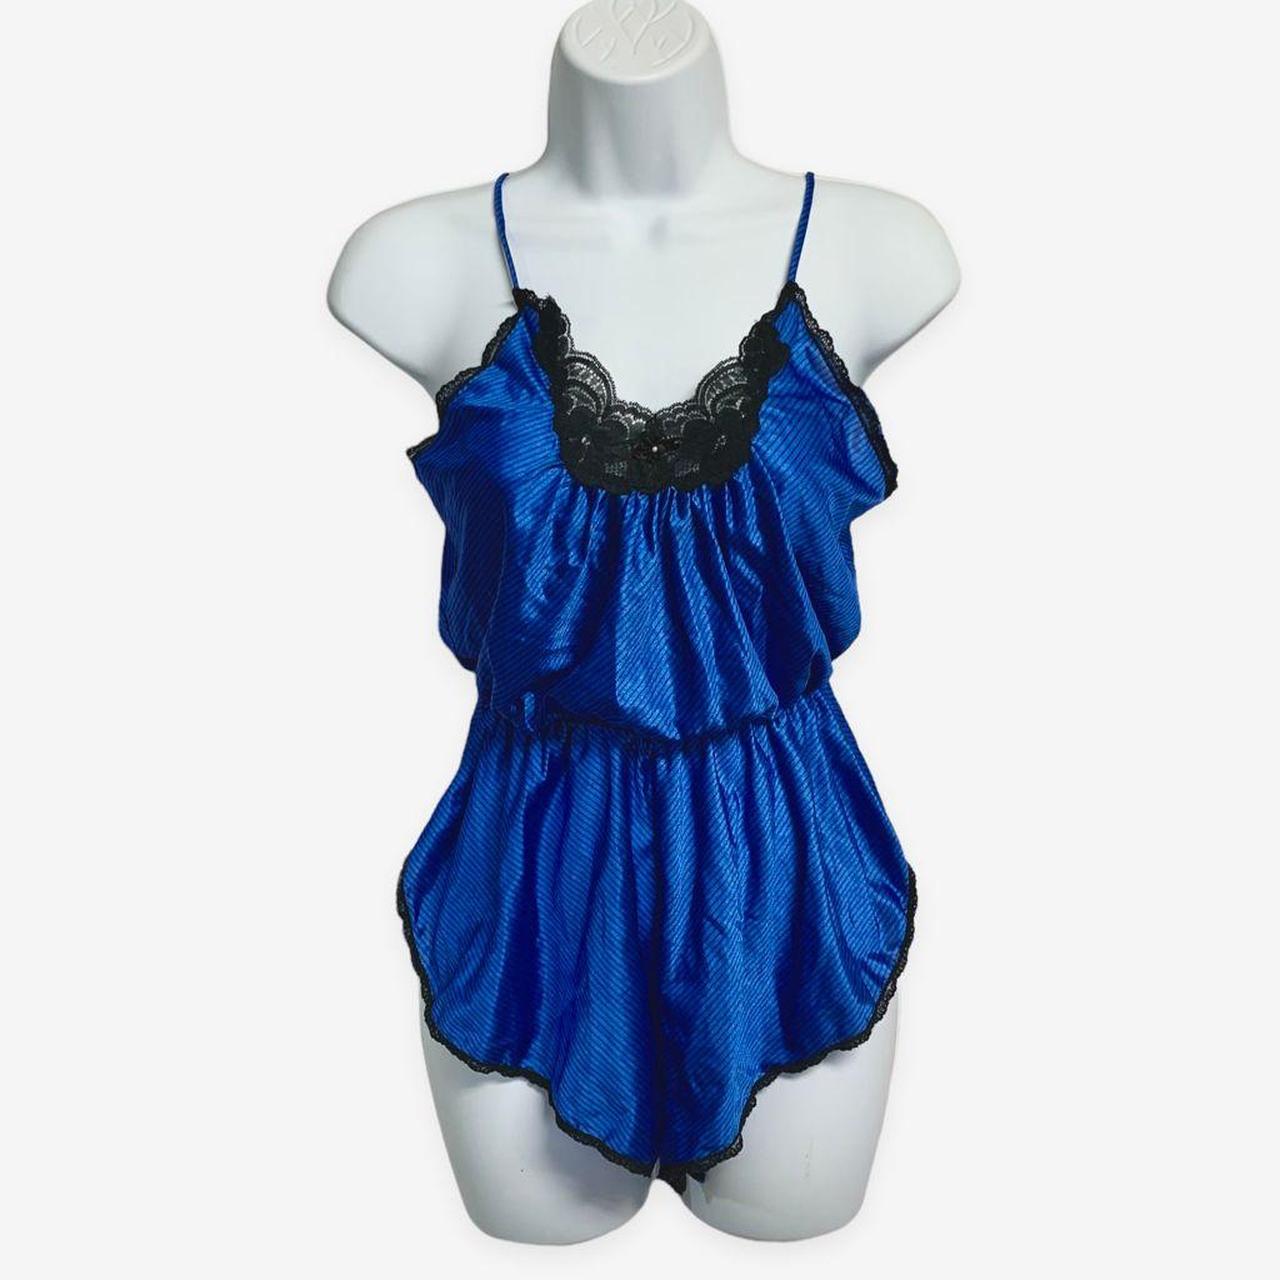 Sears Women's Blue and Black Bodysuit (2)